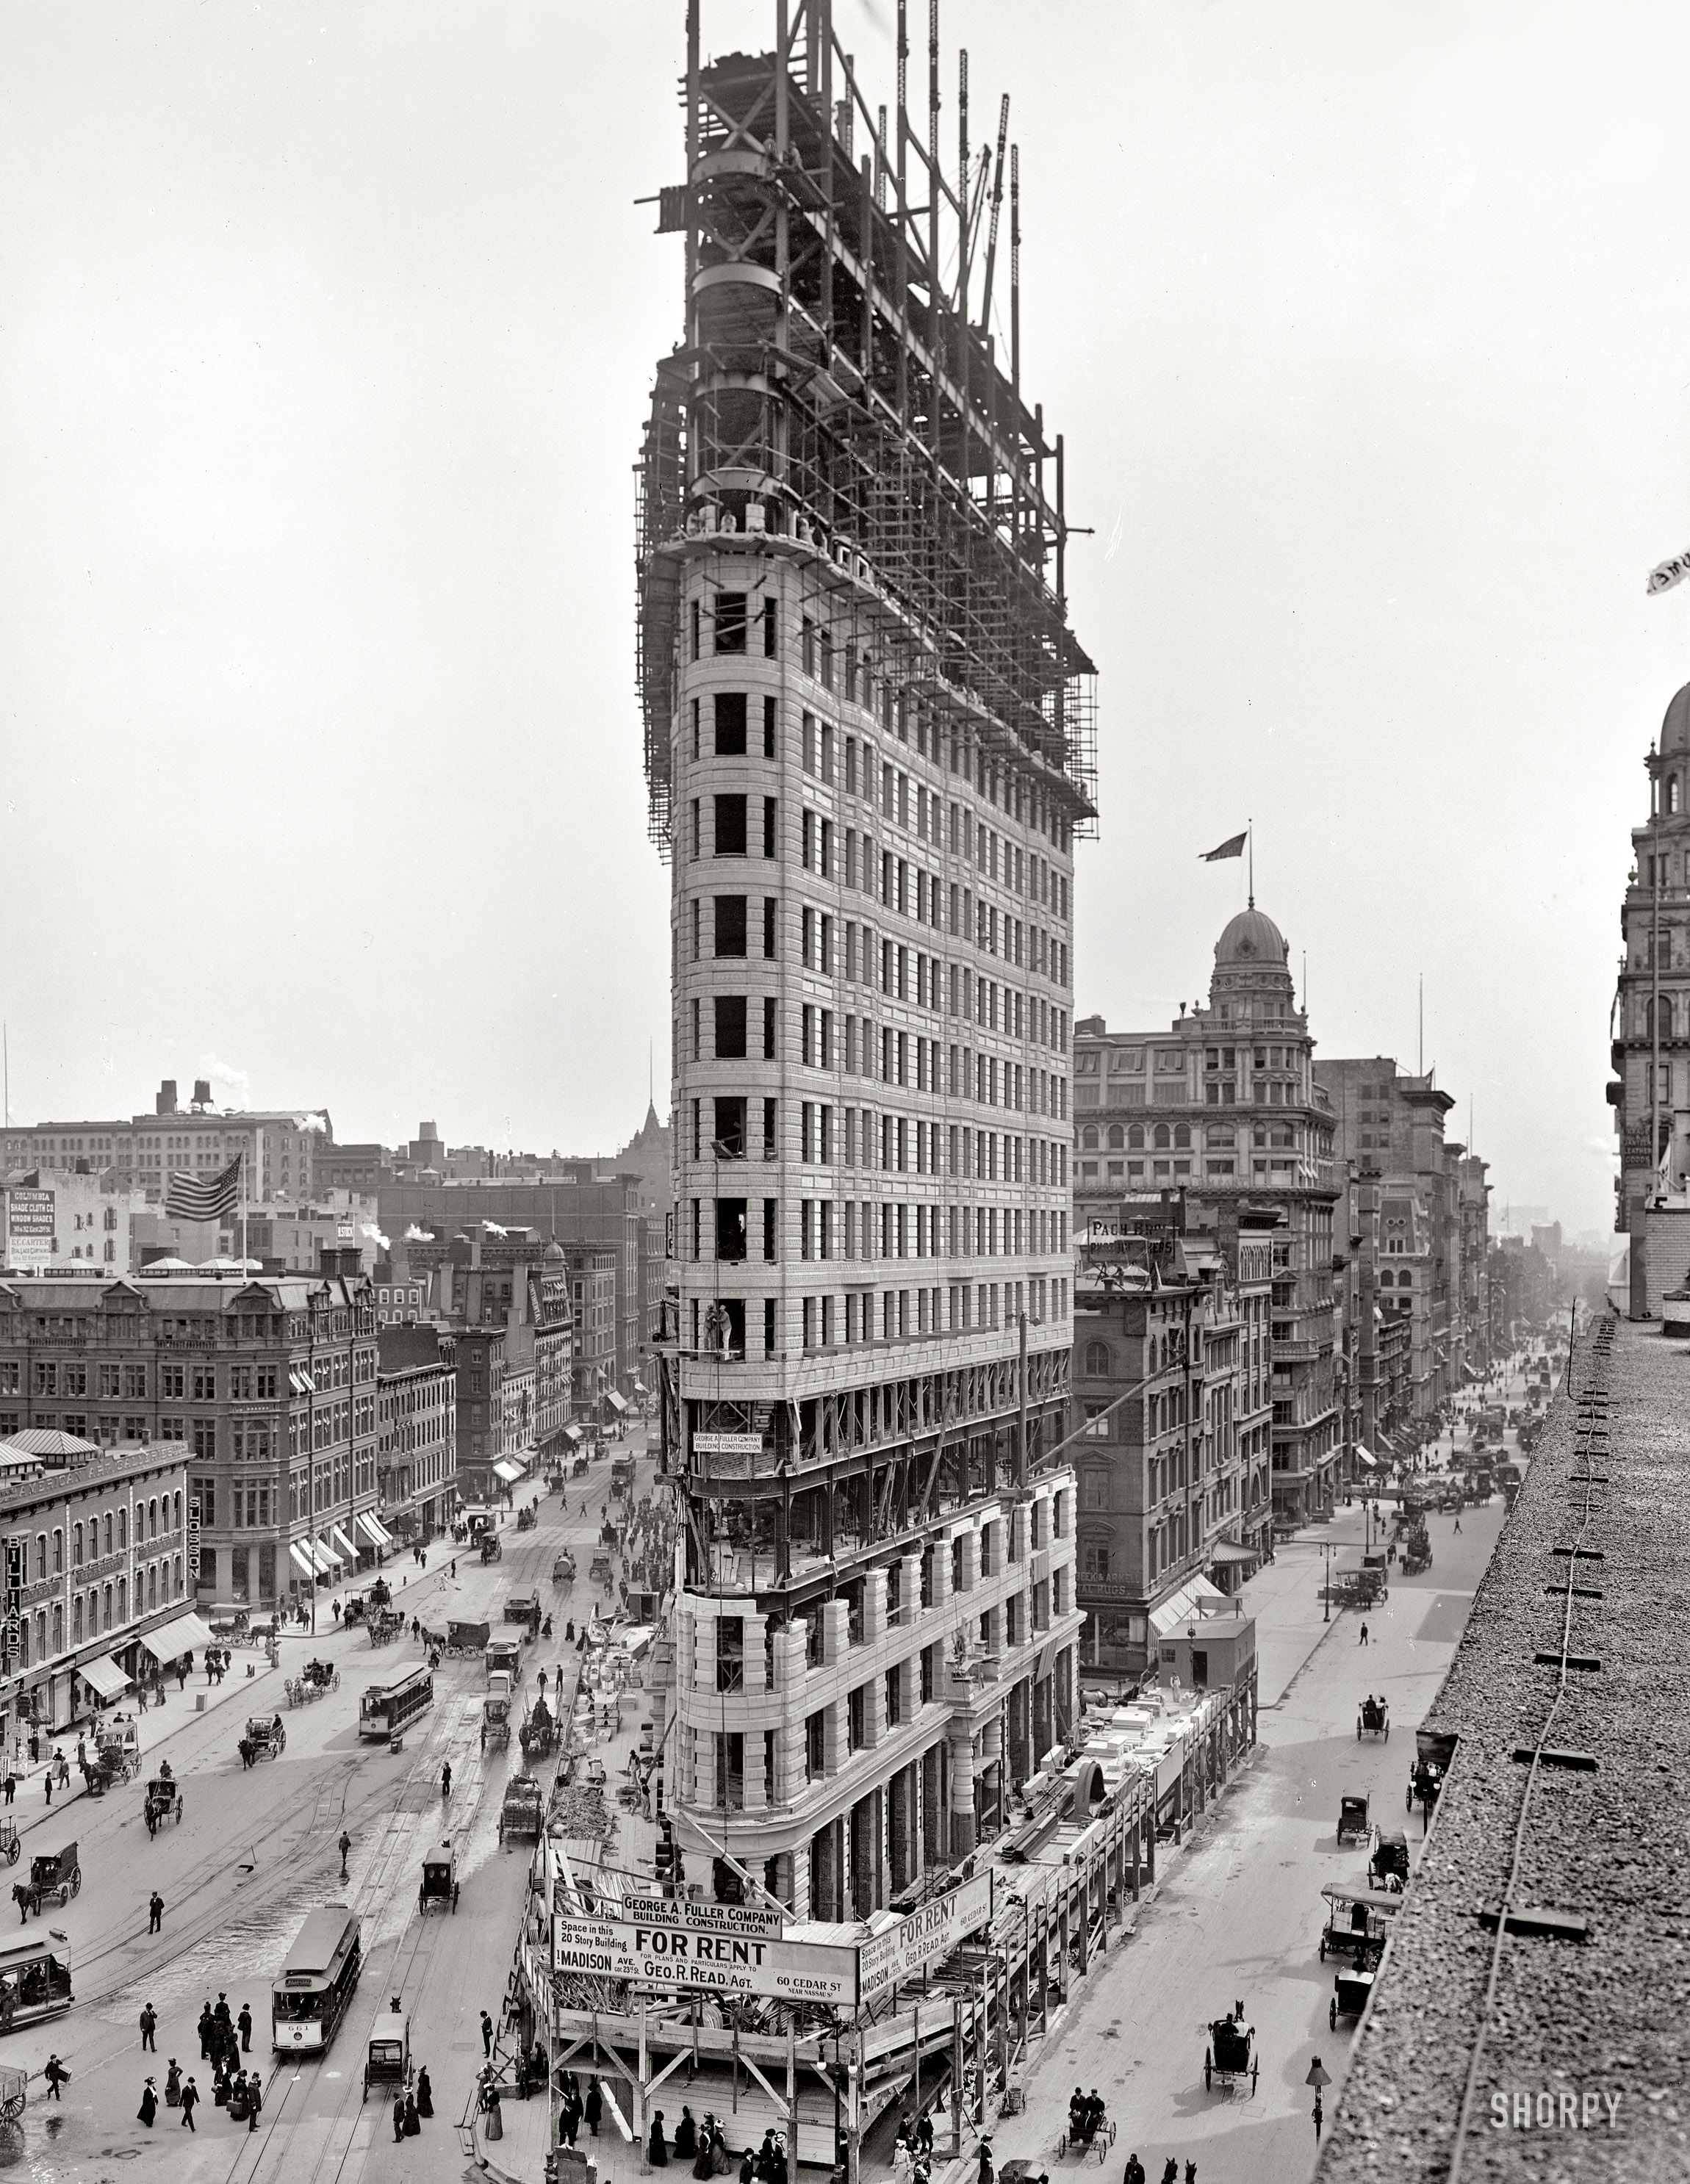 "Flatiron Building, New York." The Manhattan landmark under construction circa 1902. 8x10 inch glass negative, Detroit Publishing Co. View full size.